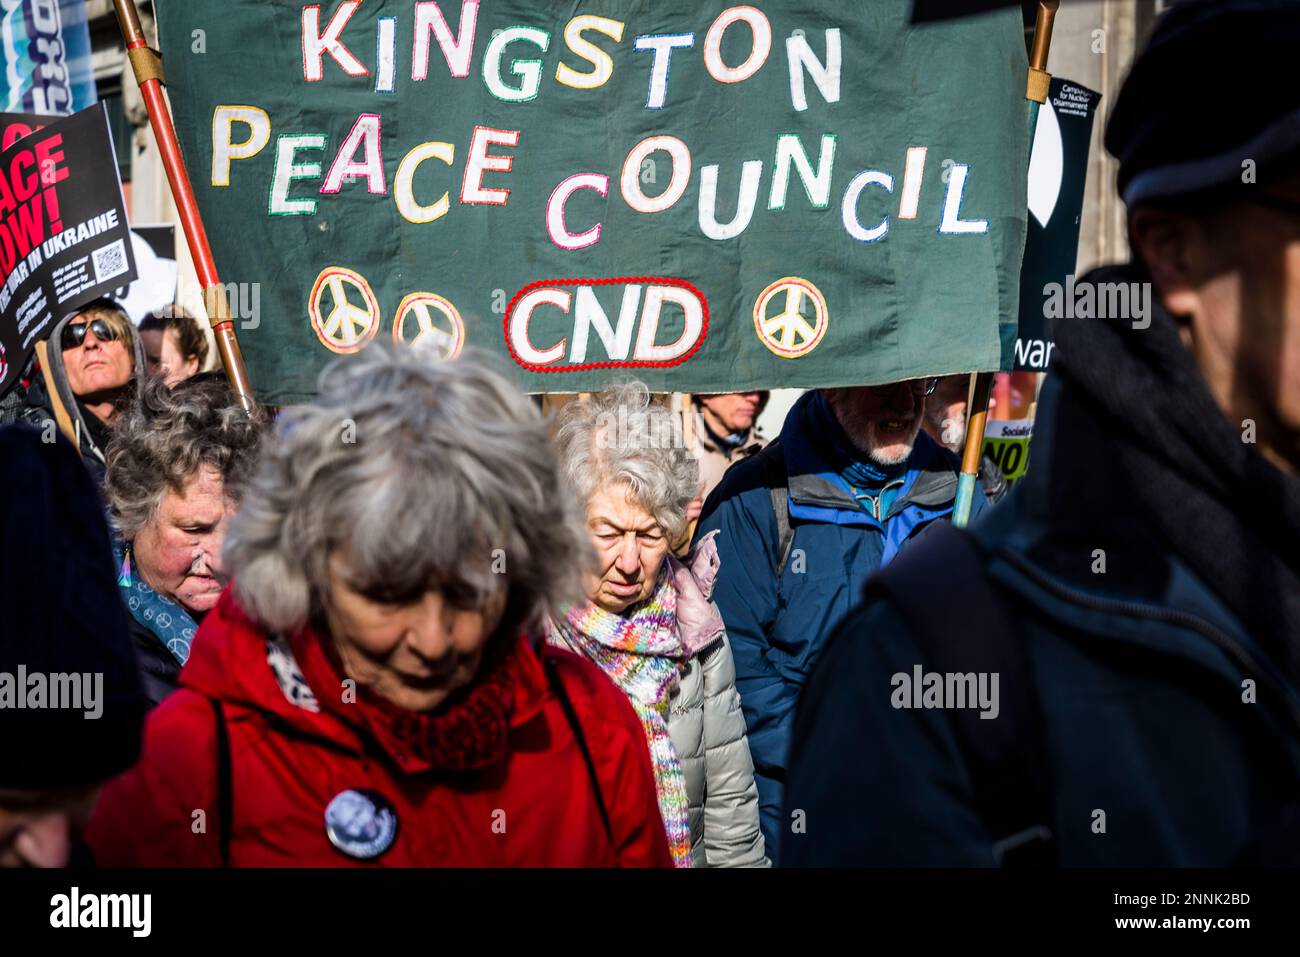 Kingston Peace Council, Campaign for Nuclear Disarmament (CND) und Stop the war Coalition Demonstration, die das Ende des Krieges in der Ukraine, London, U fordert Stockfoto